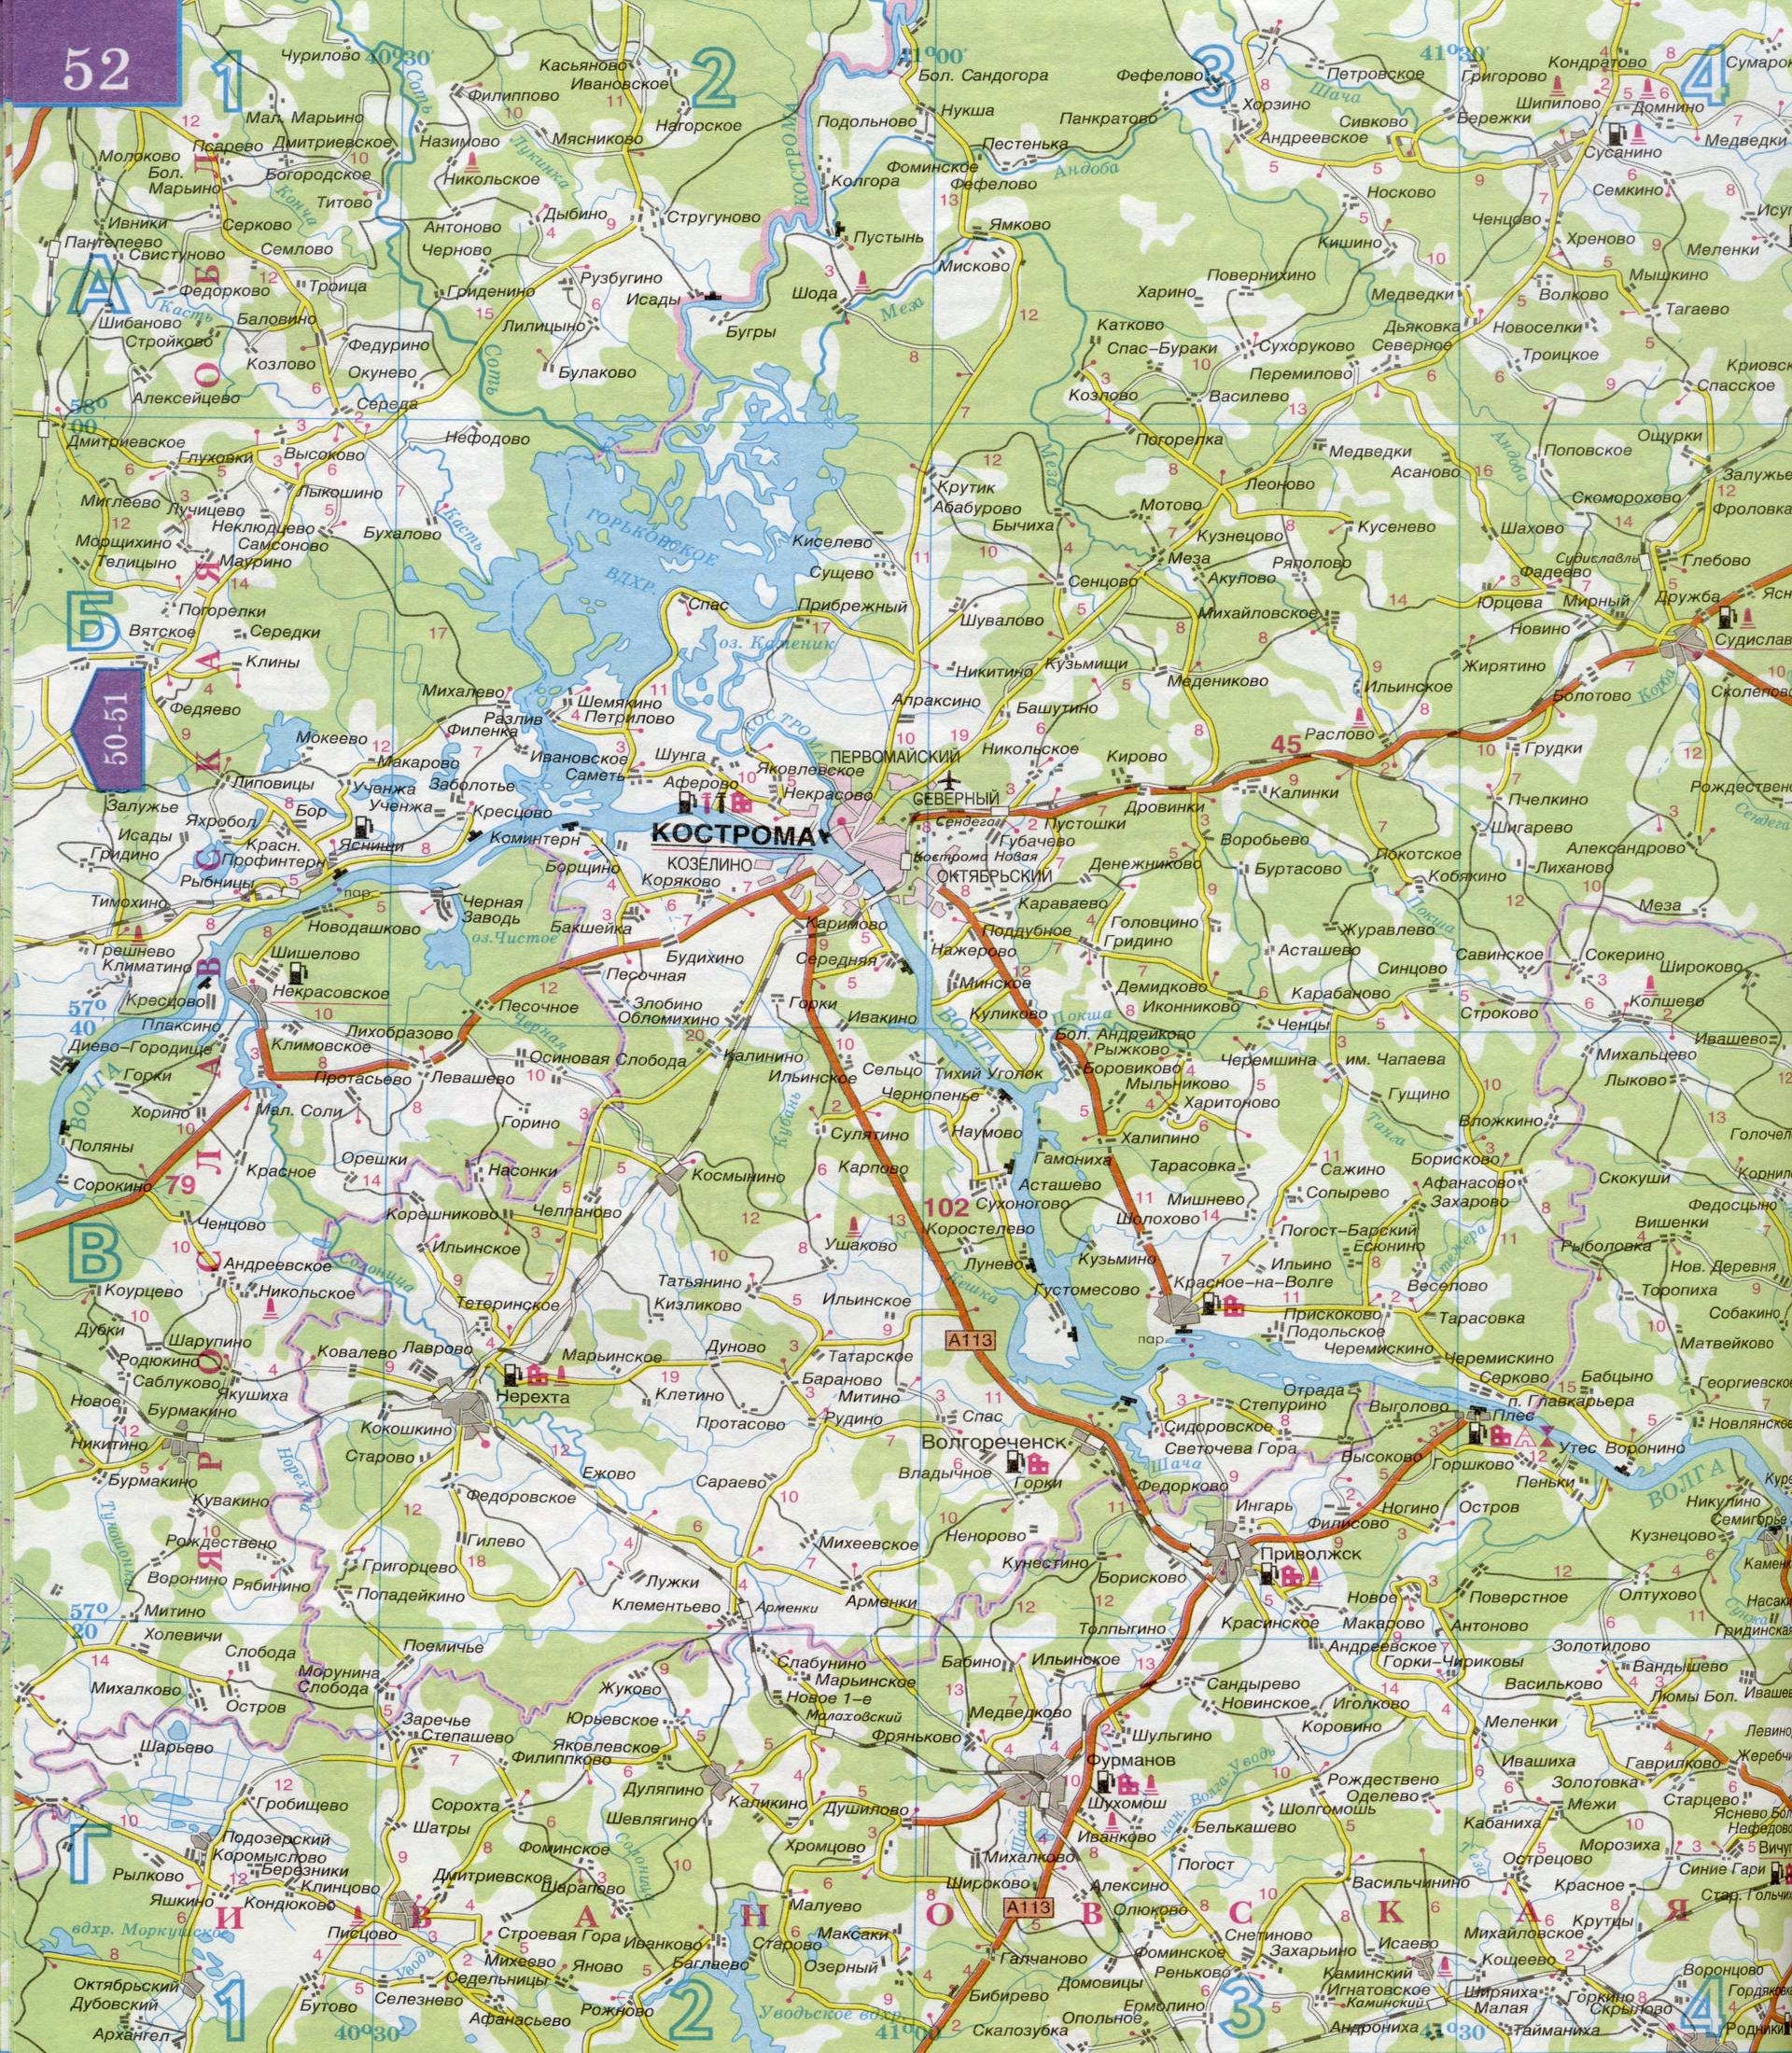 Карта Костромской области масштаба 1см:5км. Карта автодорог Костромской области. Скачать карту бесплатно, A0 - 